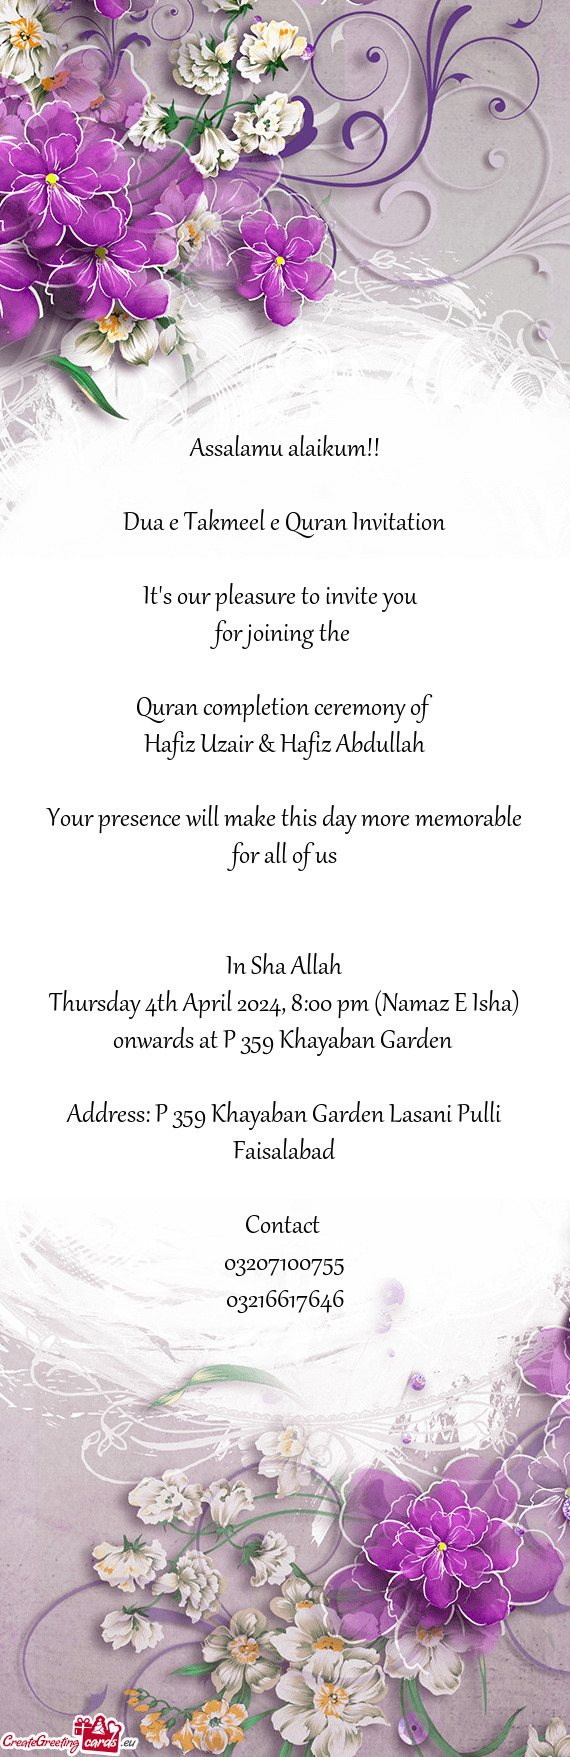 Thursday 4th April 2024, 8:00 pm (Namaz E Isha) onwards at P 359 Khayaban Garden